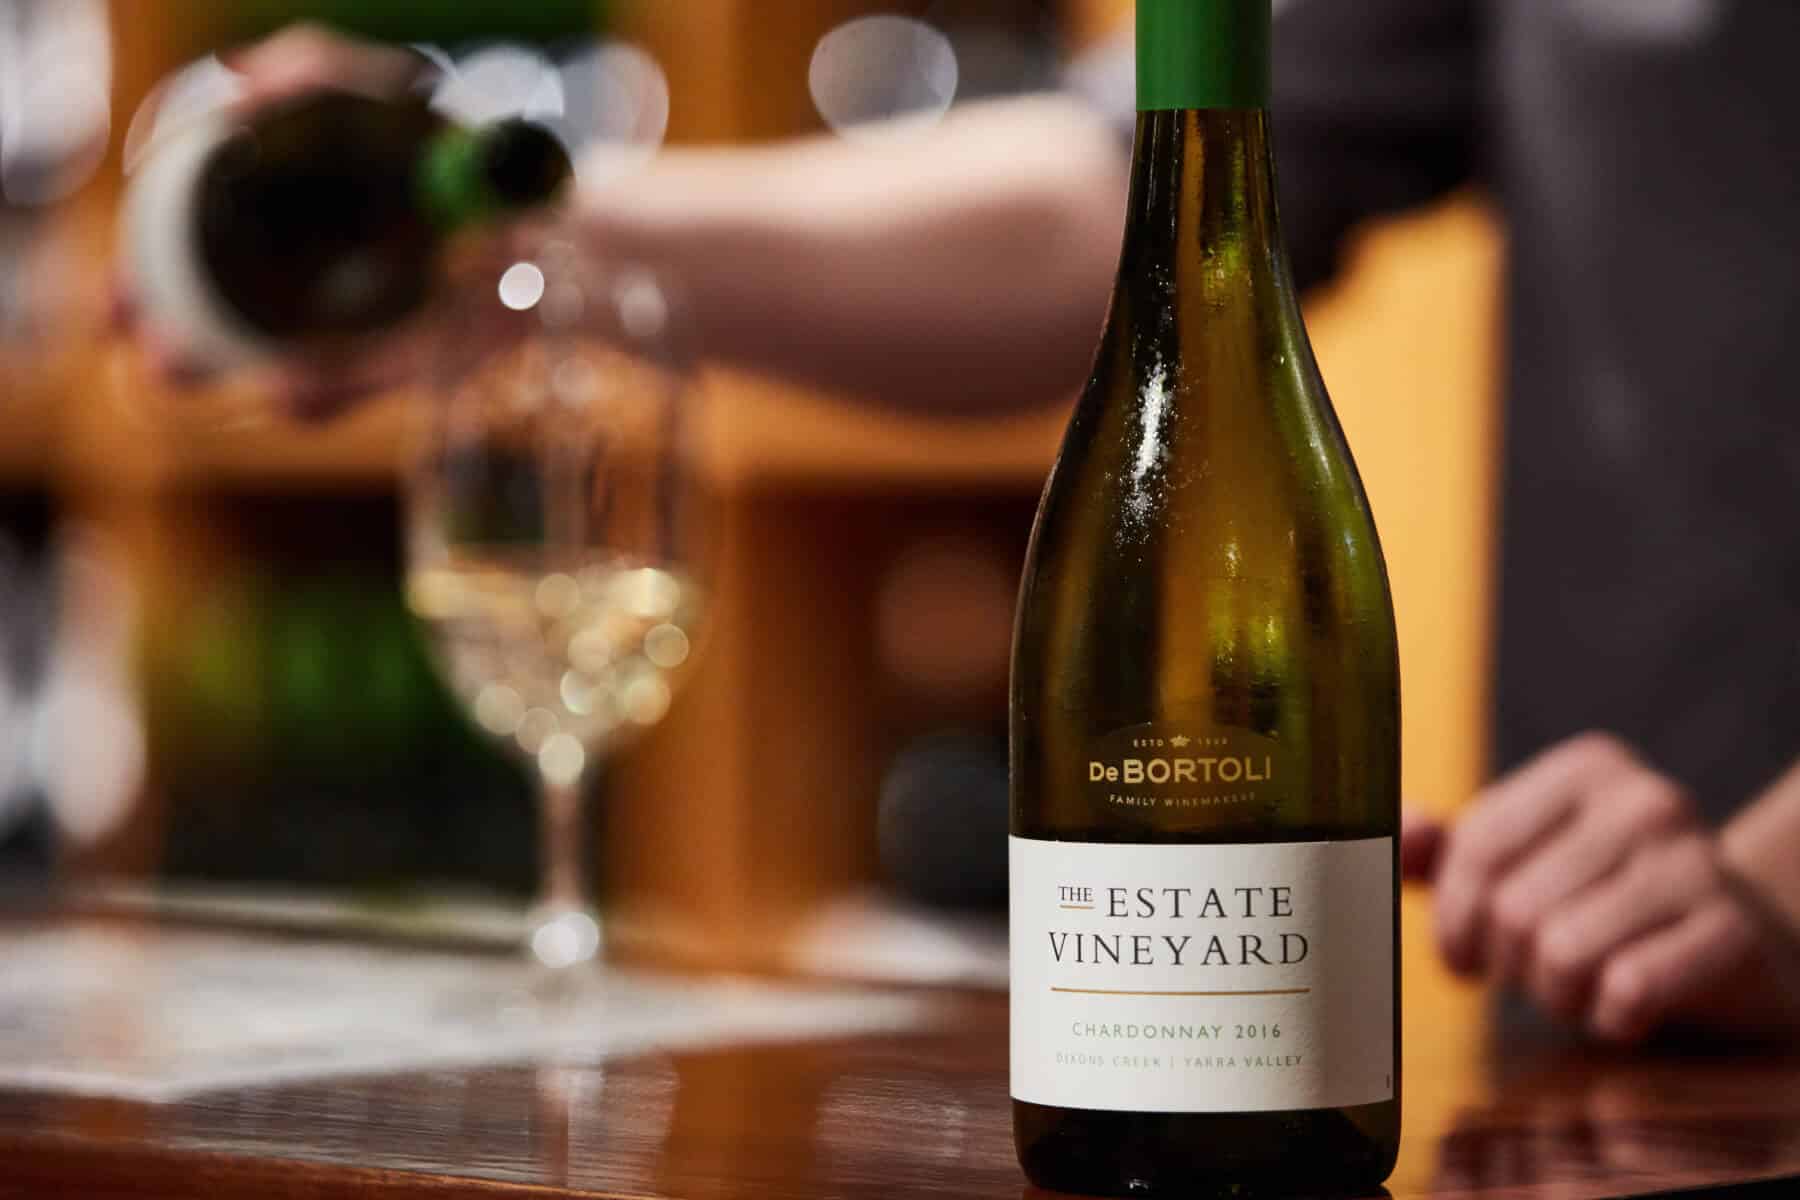 Melbourne | Pouring wine